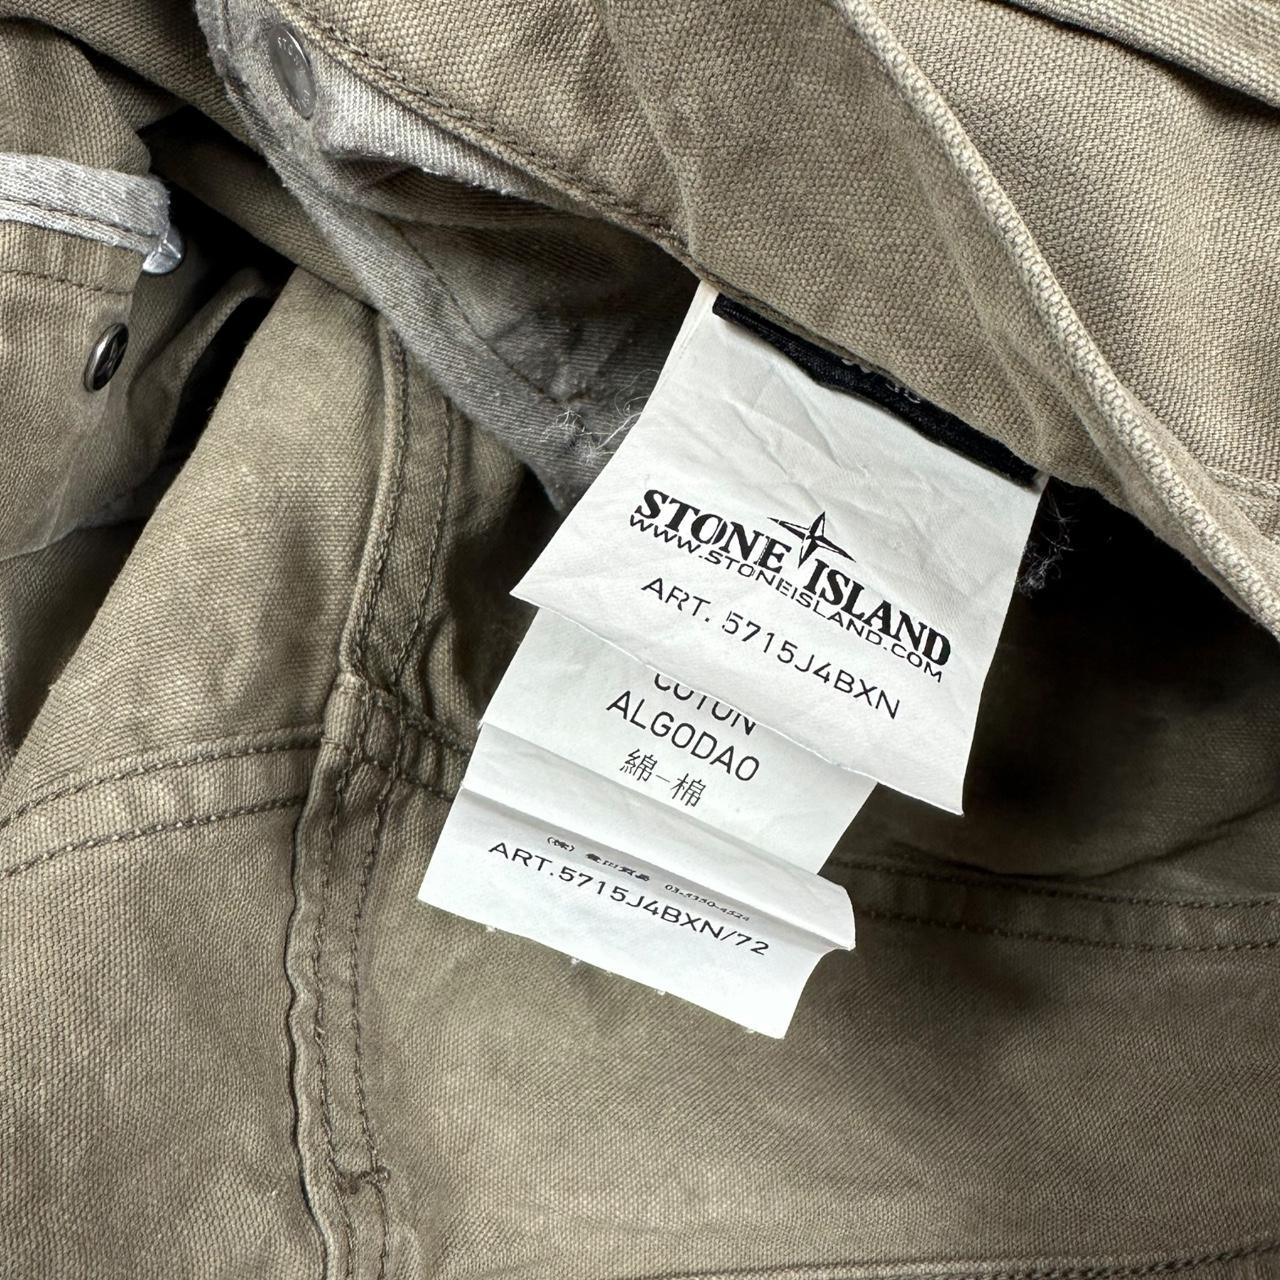 A/W 2012 Stone Island Khaki Cotton Shorts